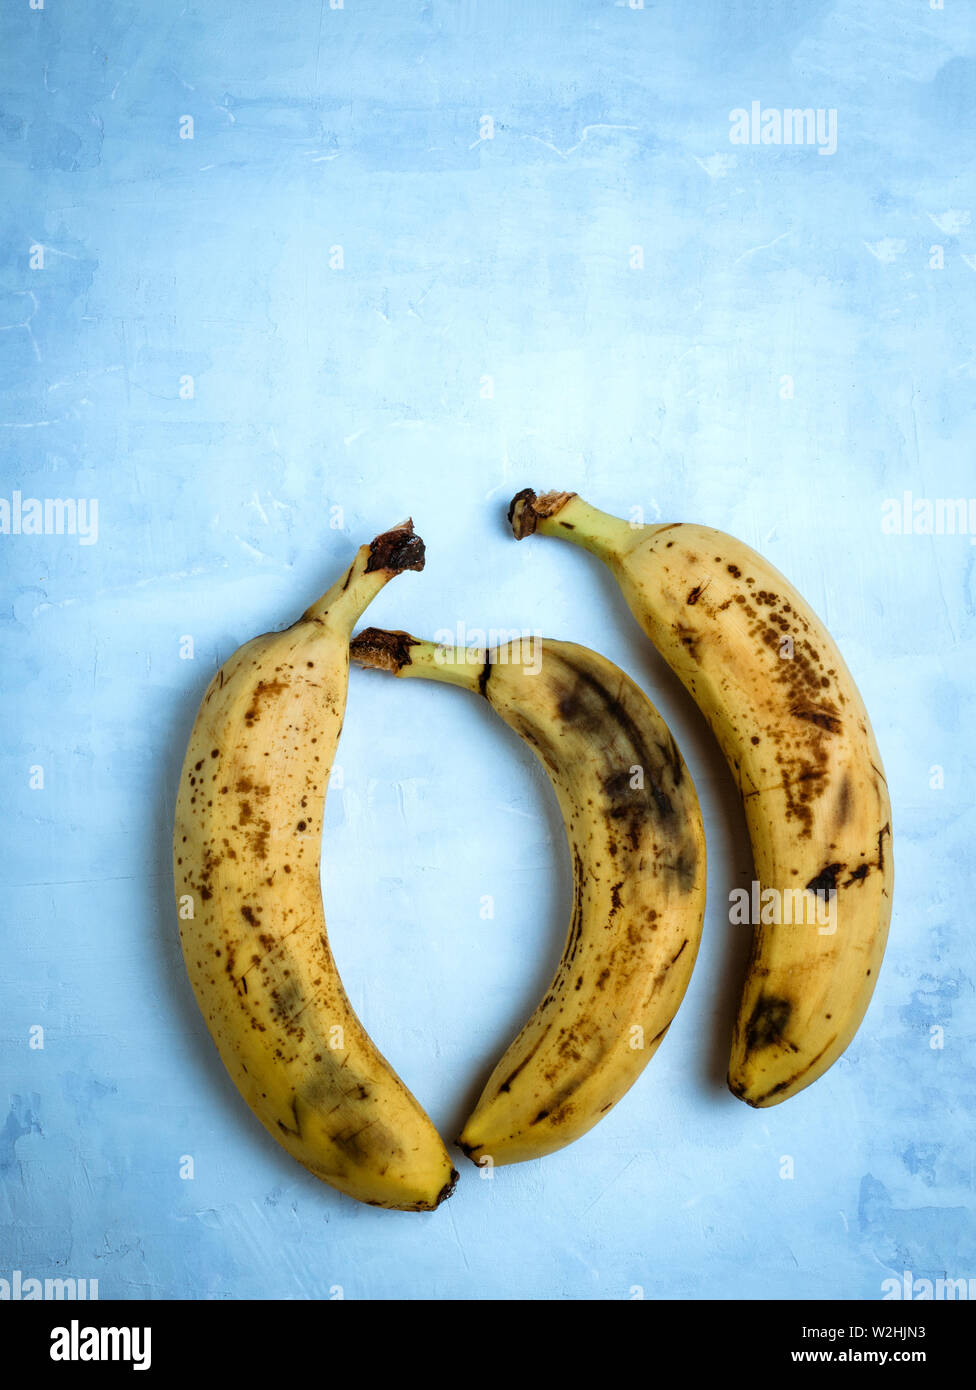 Old banana on light blue background. Zero waste concept. Save the lone banana. Stock Photo